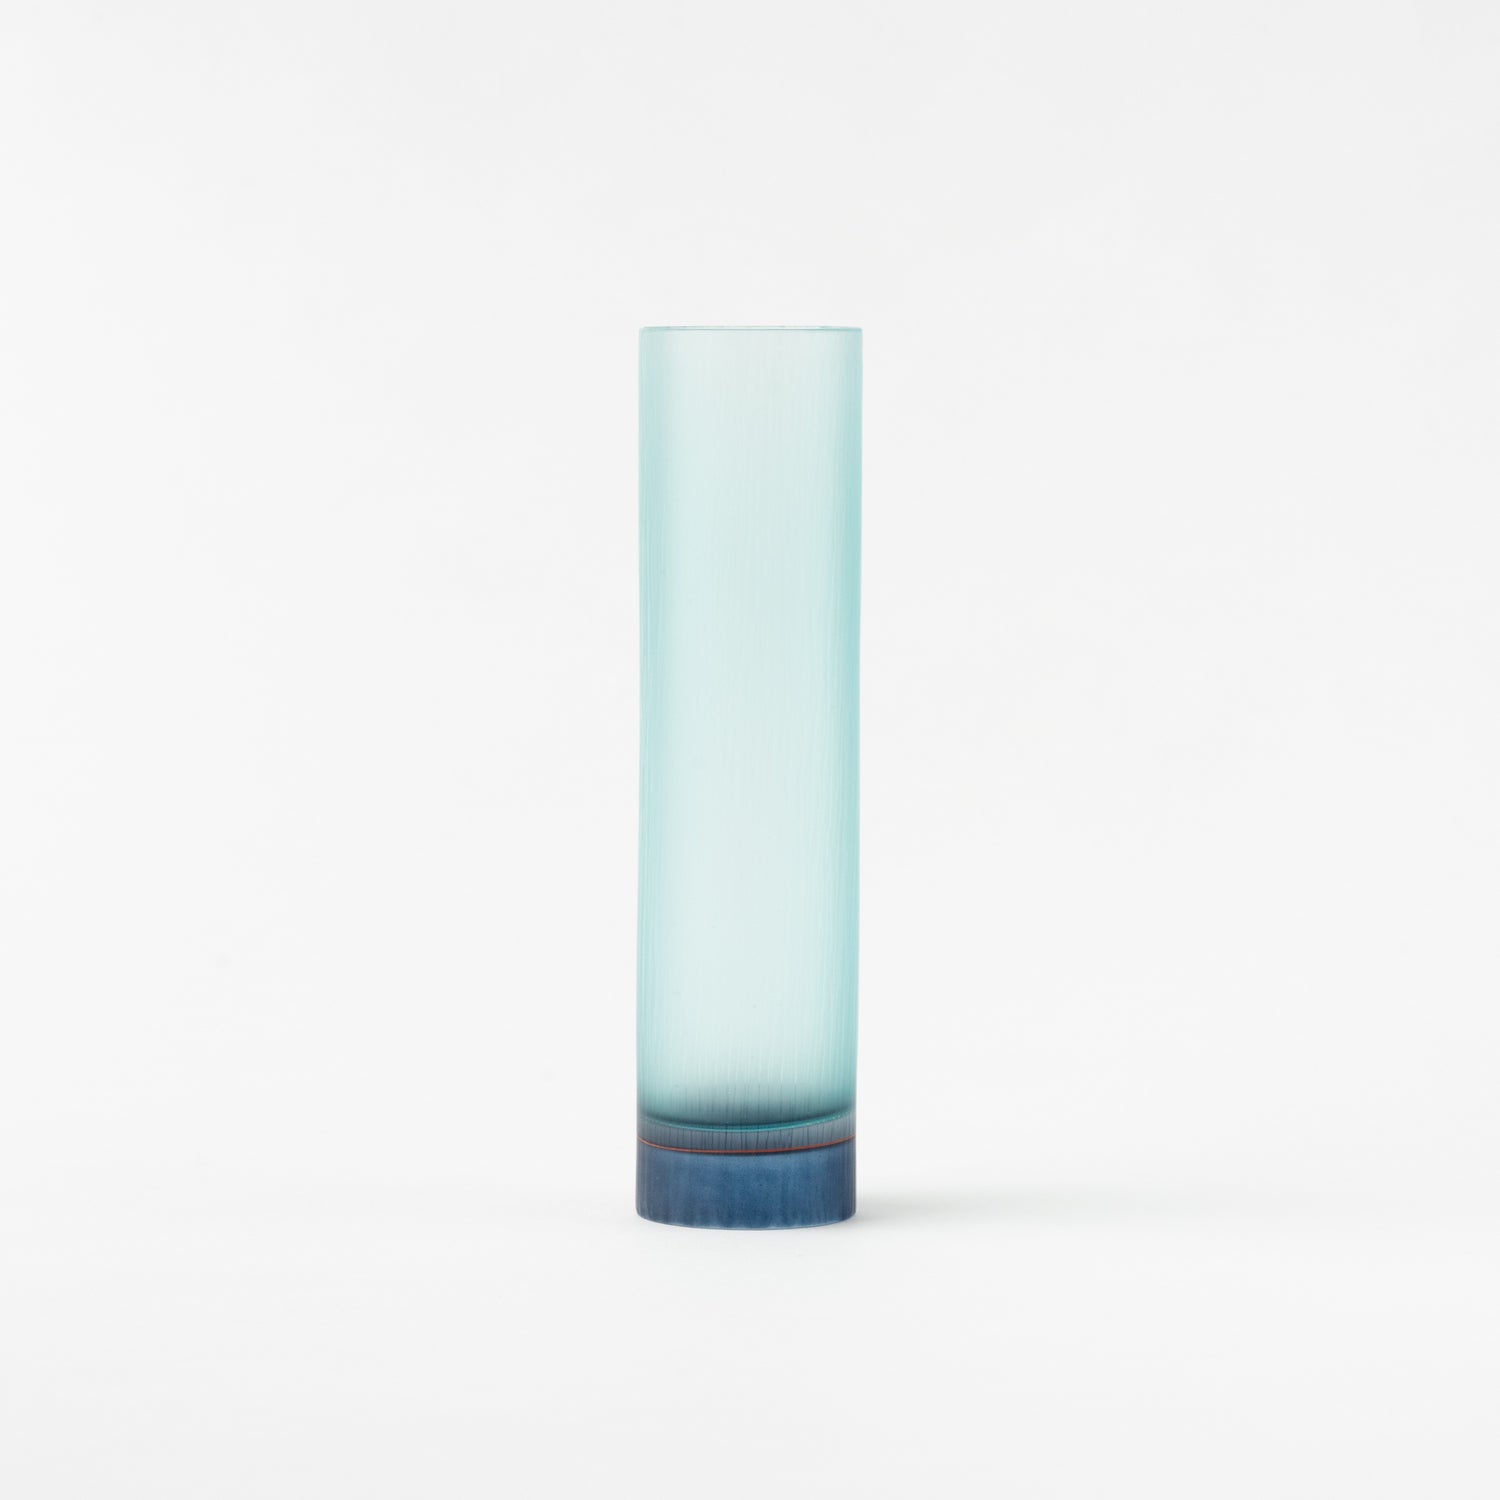 Silence Flower Vase (Aqua/Blue) / Takeyoshi Mitsui